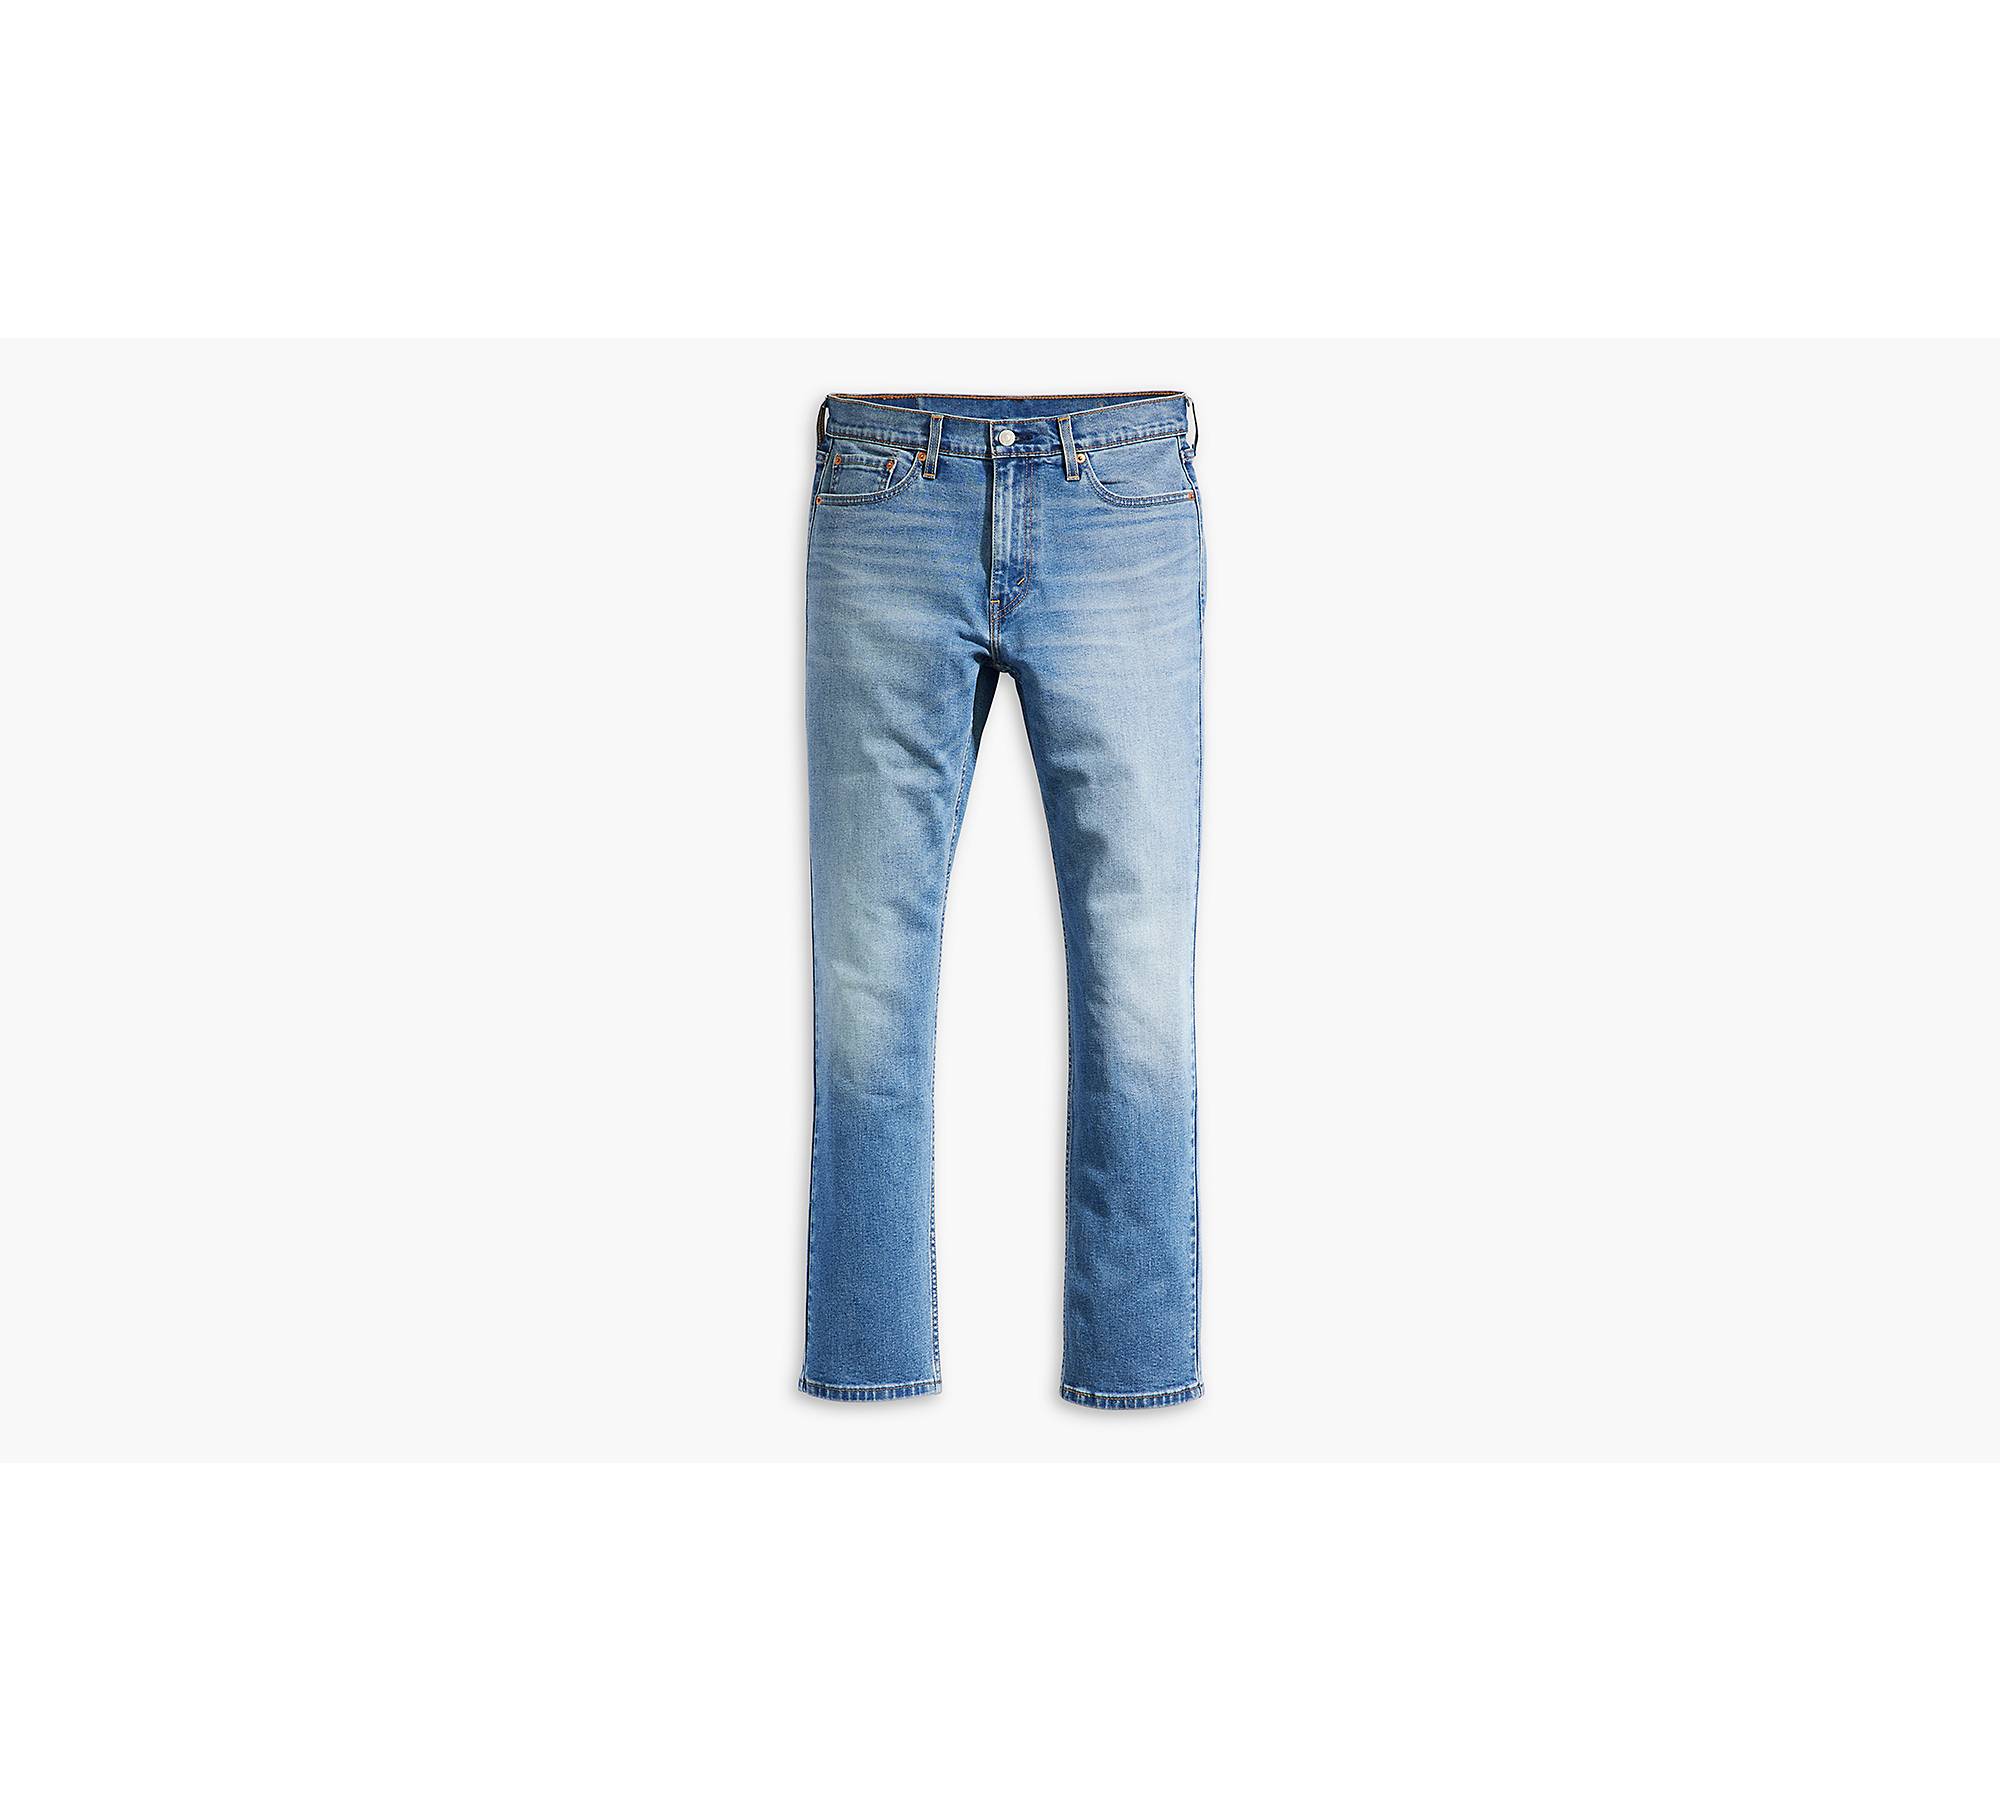 541™ Athletic Taper All Seasons Men's Jeans - Medium Wash | Levi's® US